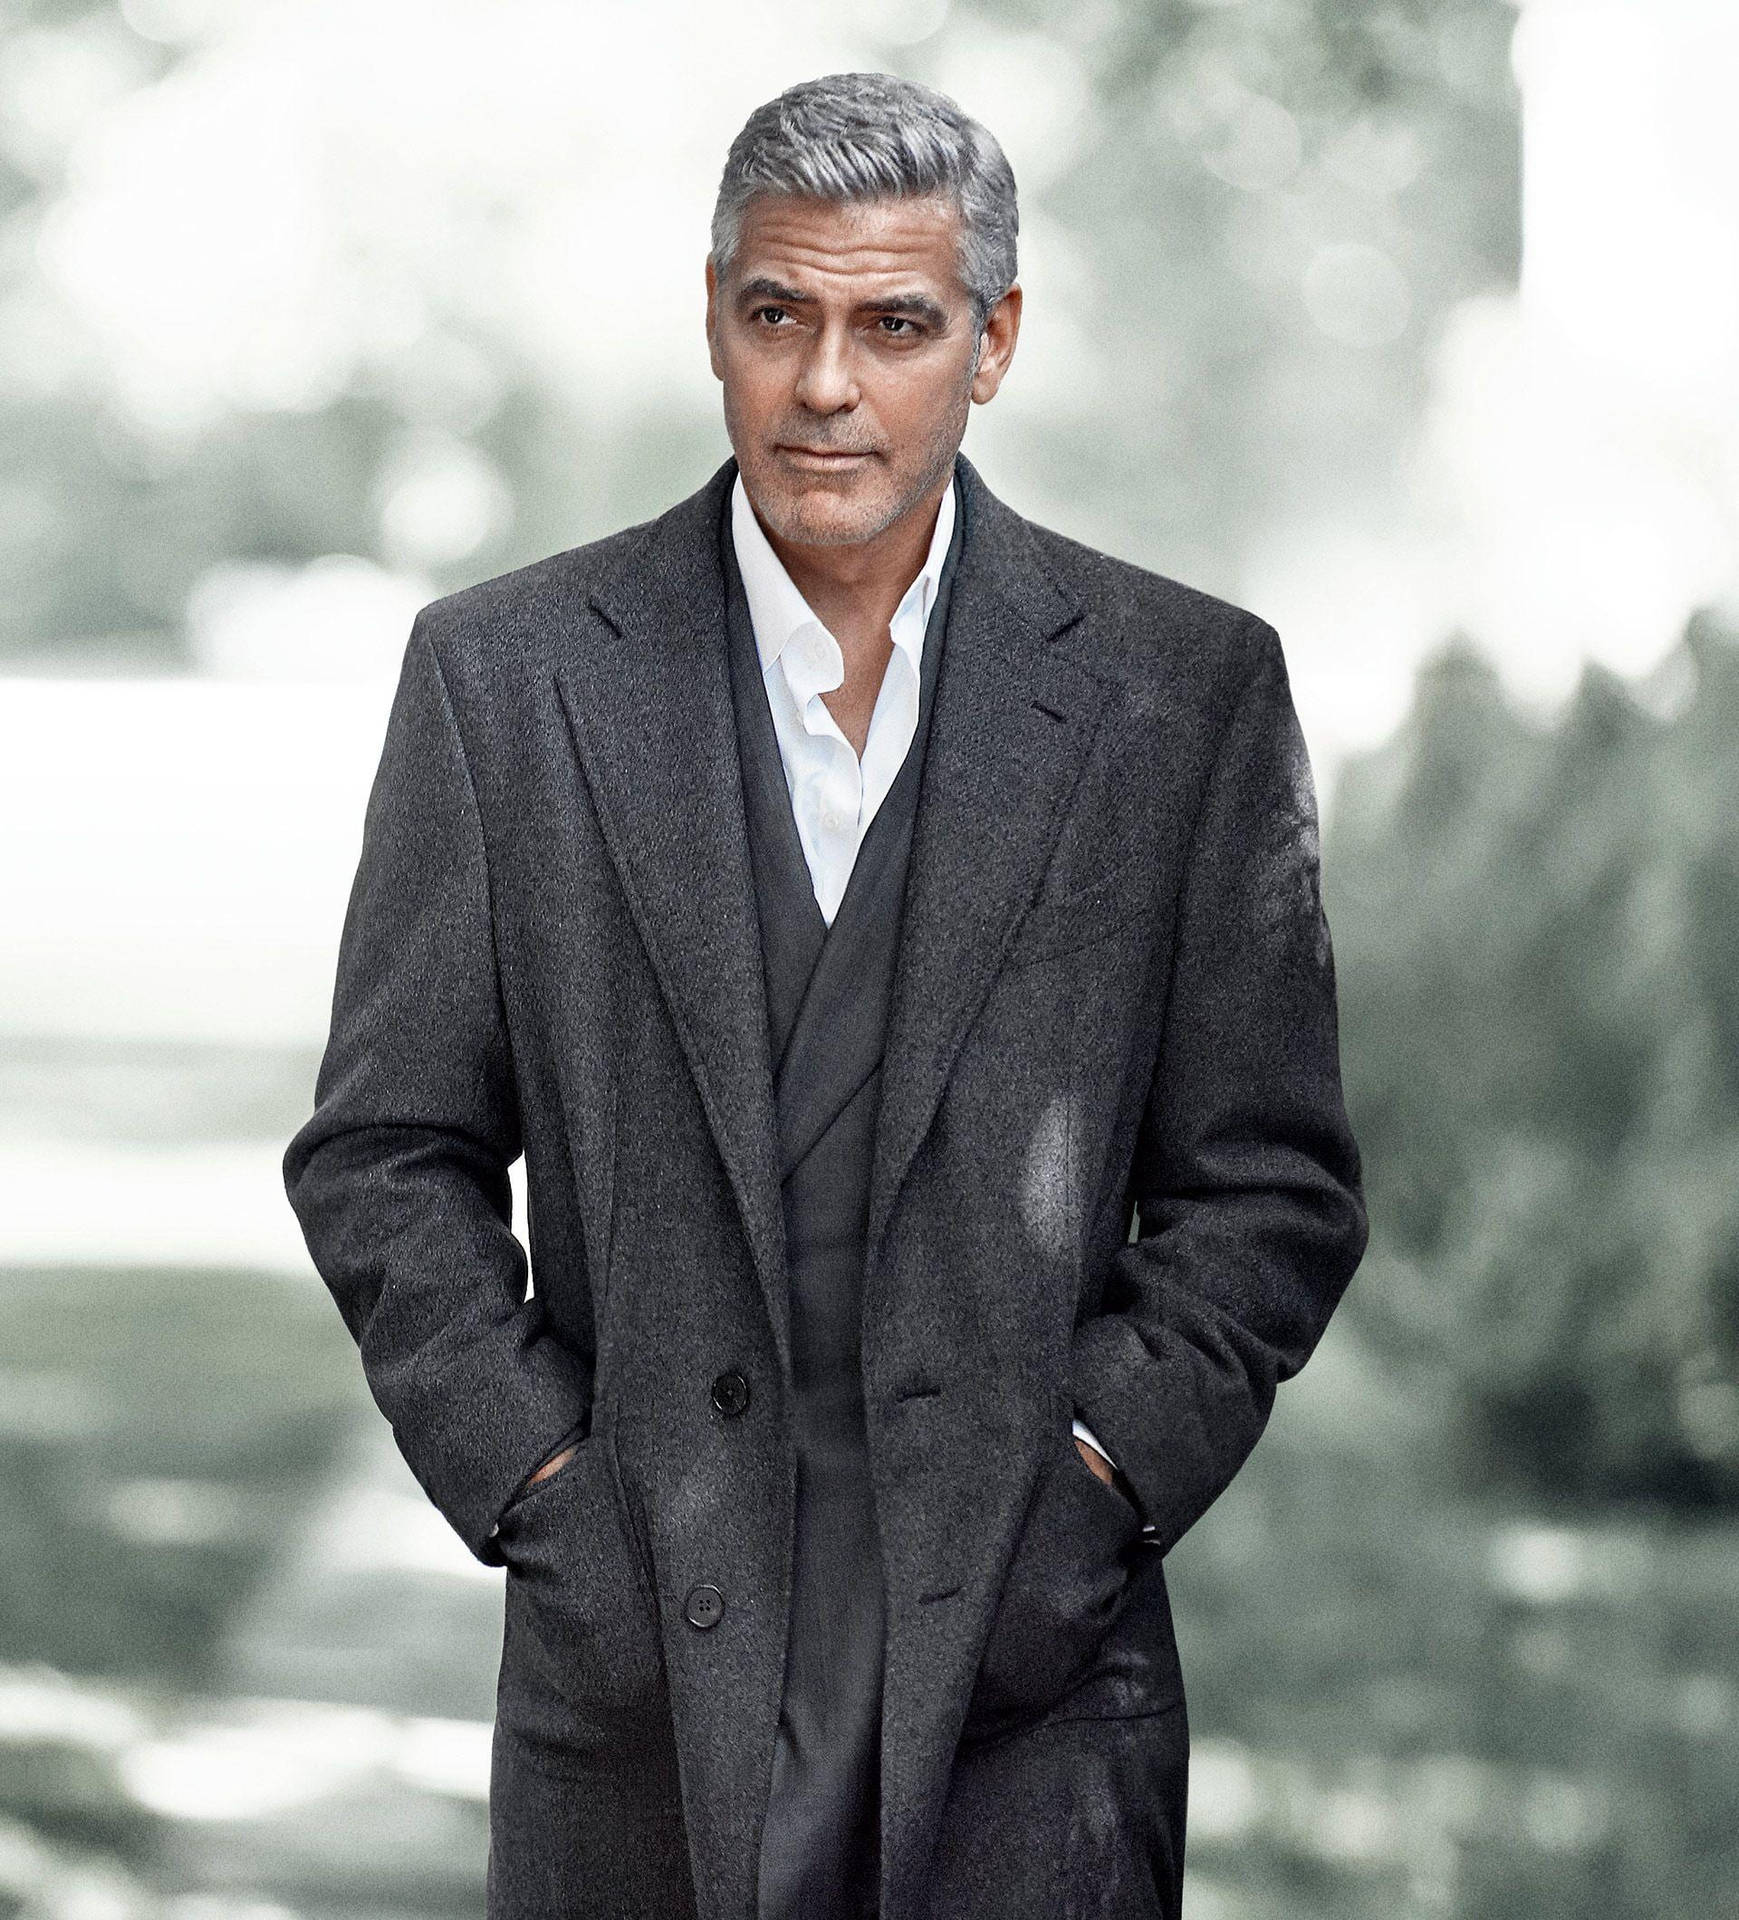 George Clooney Hands In Pocket Wallpaper